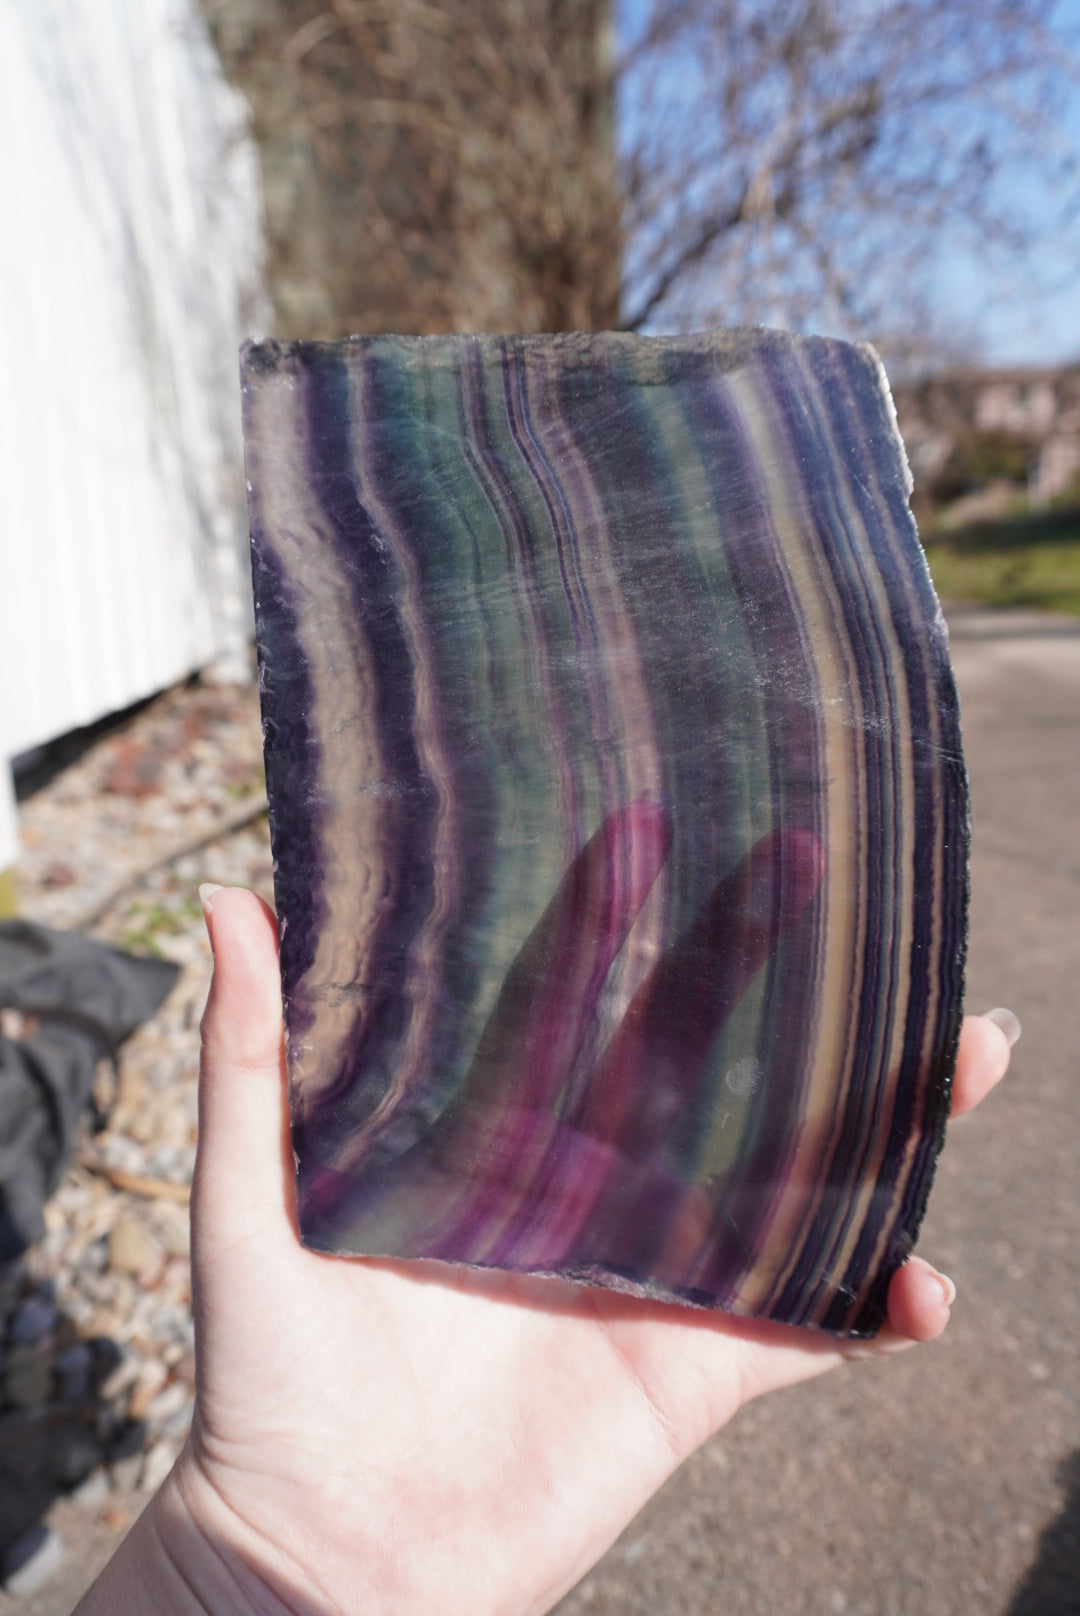 Rainbow Fluorite Slab